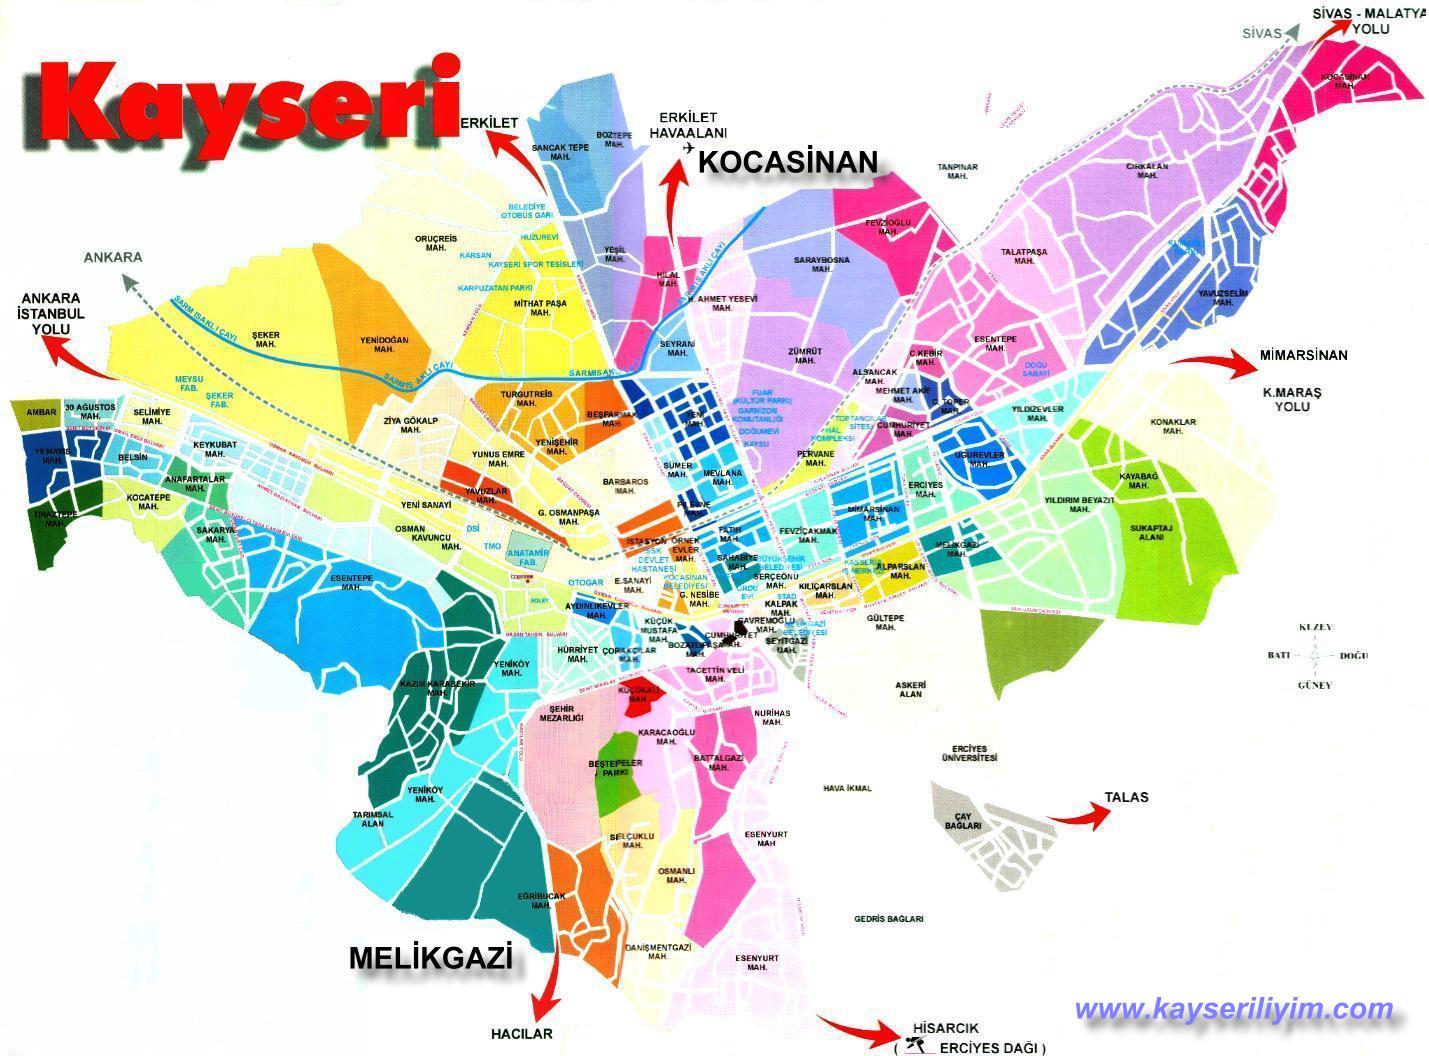 kayseri city center map